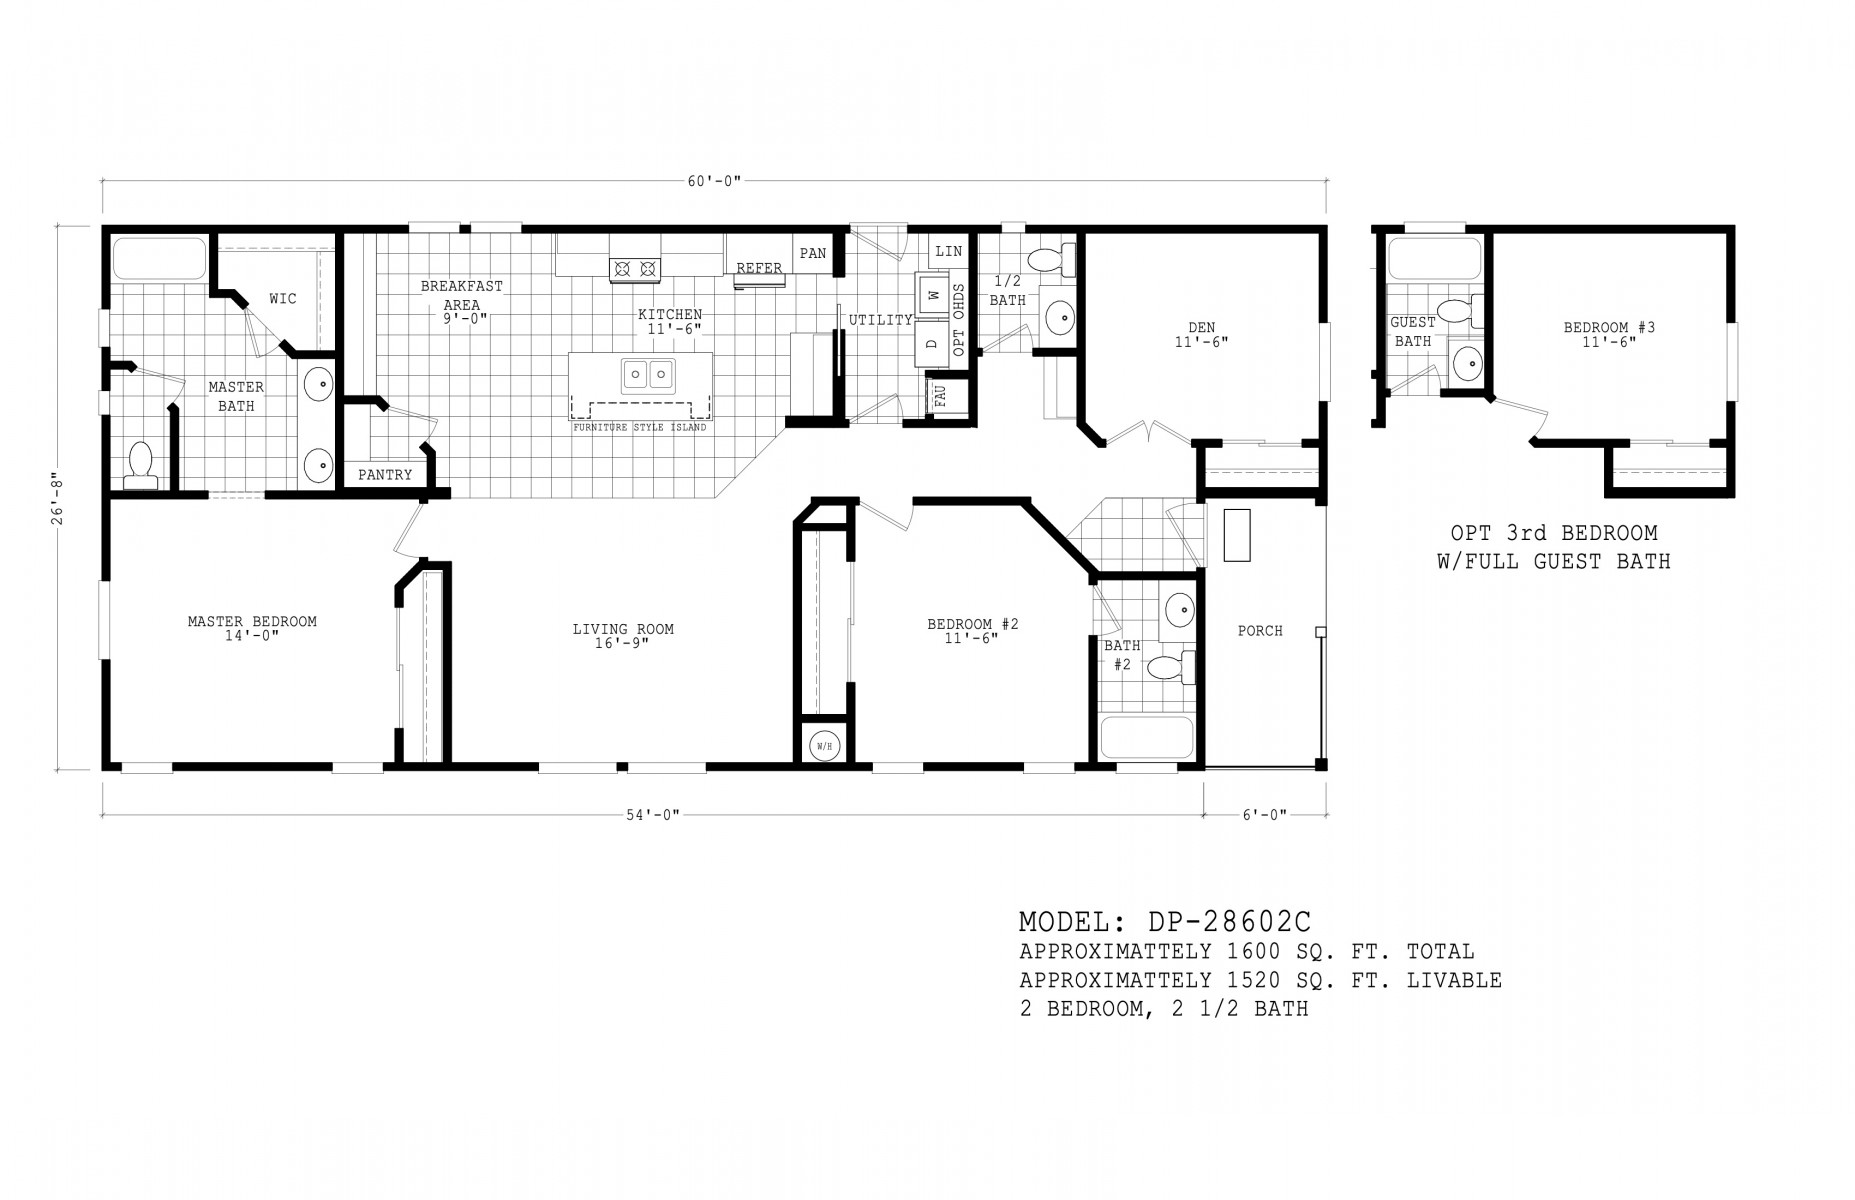 Homes Direct Modular Homes - Model DP28602C - Floorplan